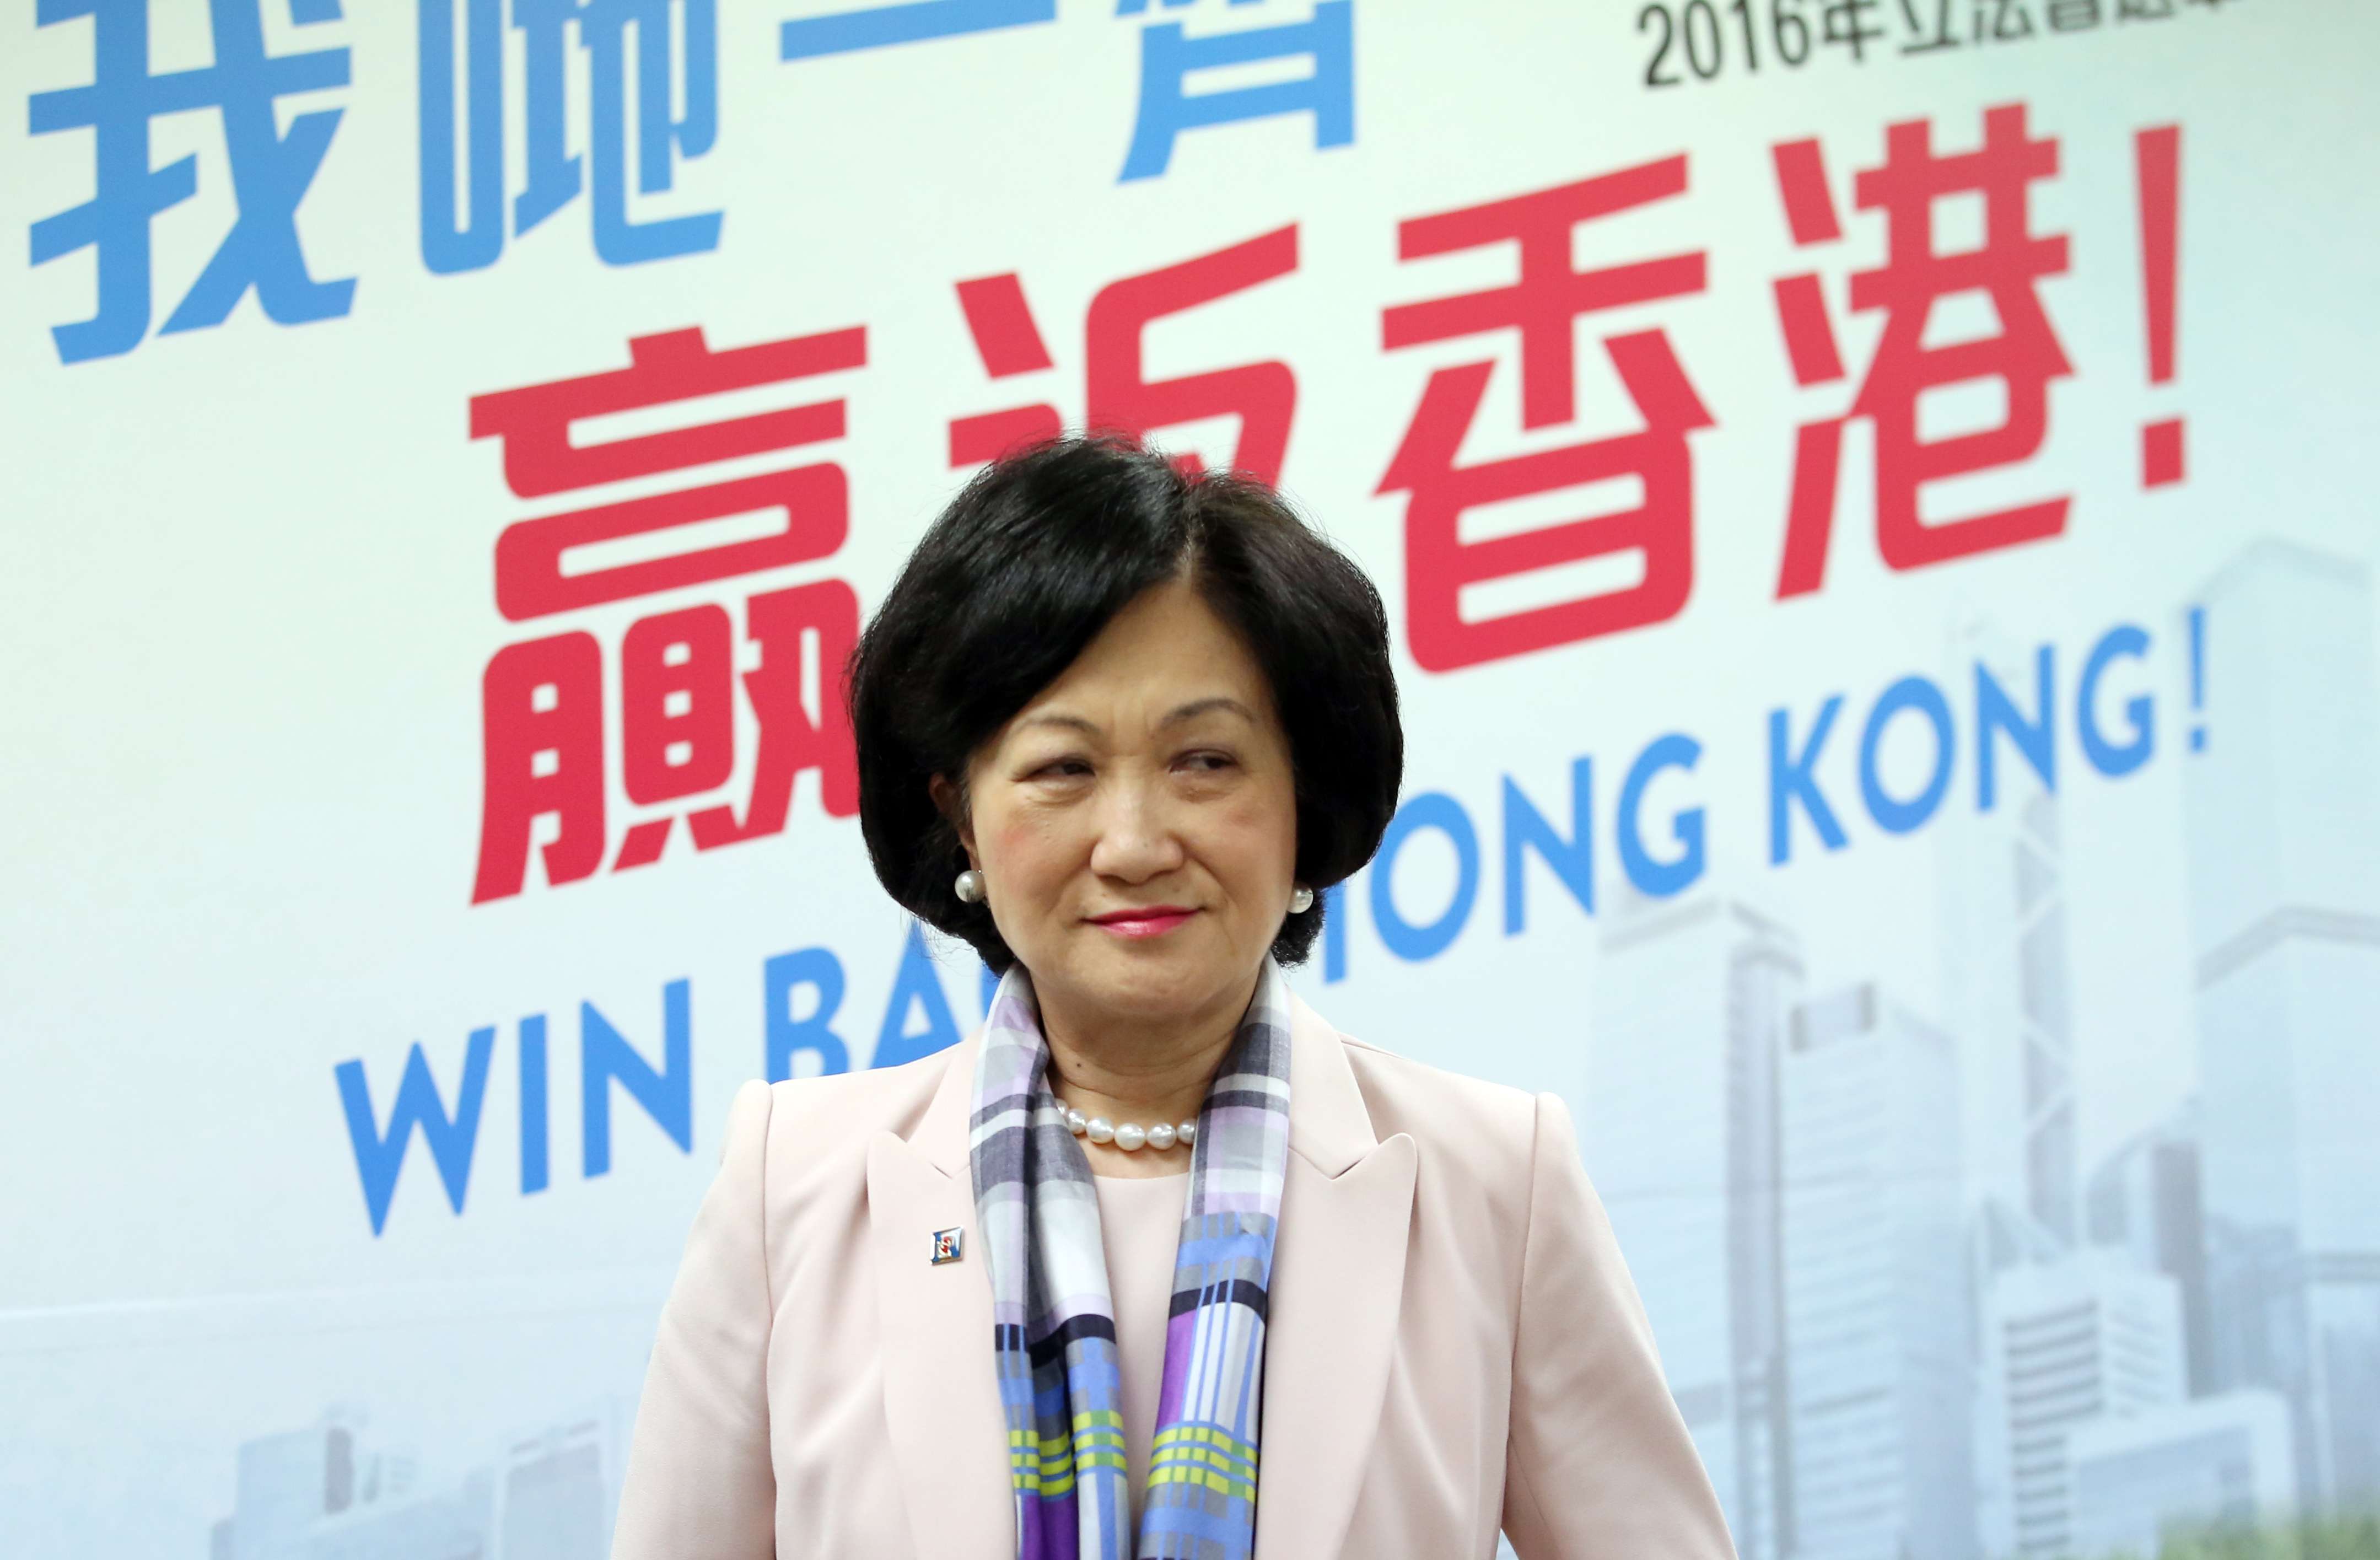 Lawmaker Regina Ip says she thinks Chief Executive Leung Chun-ying will definitely seek re-election. Photo: Nora Tam